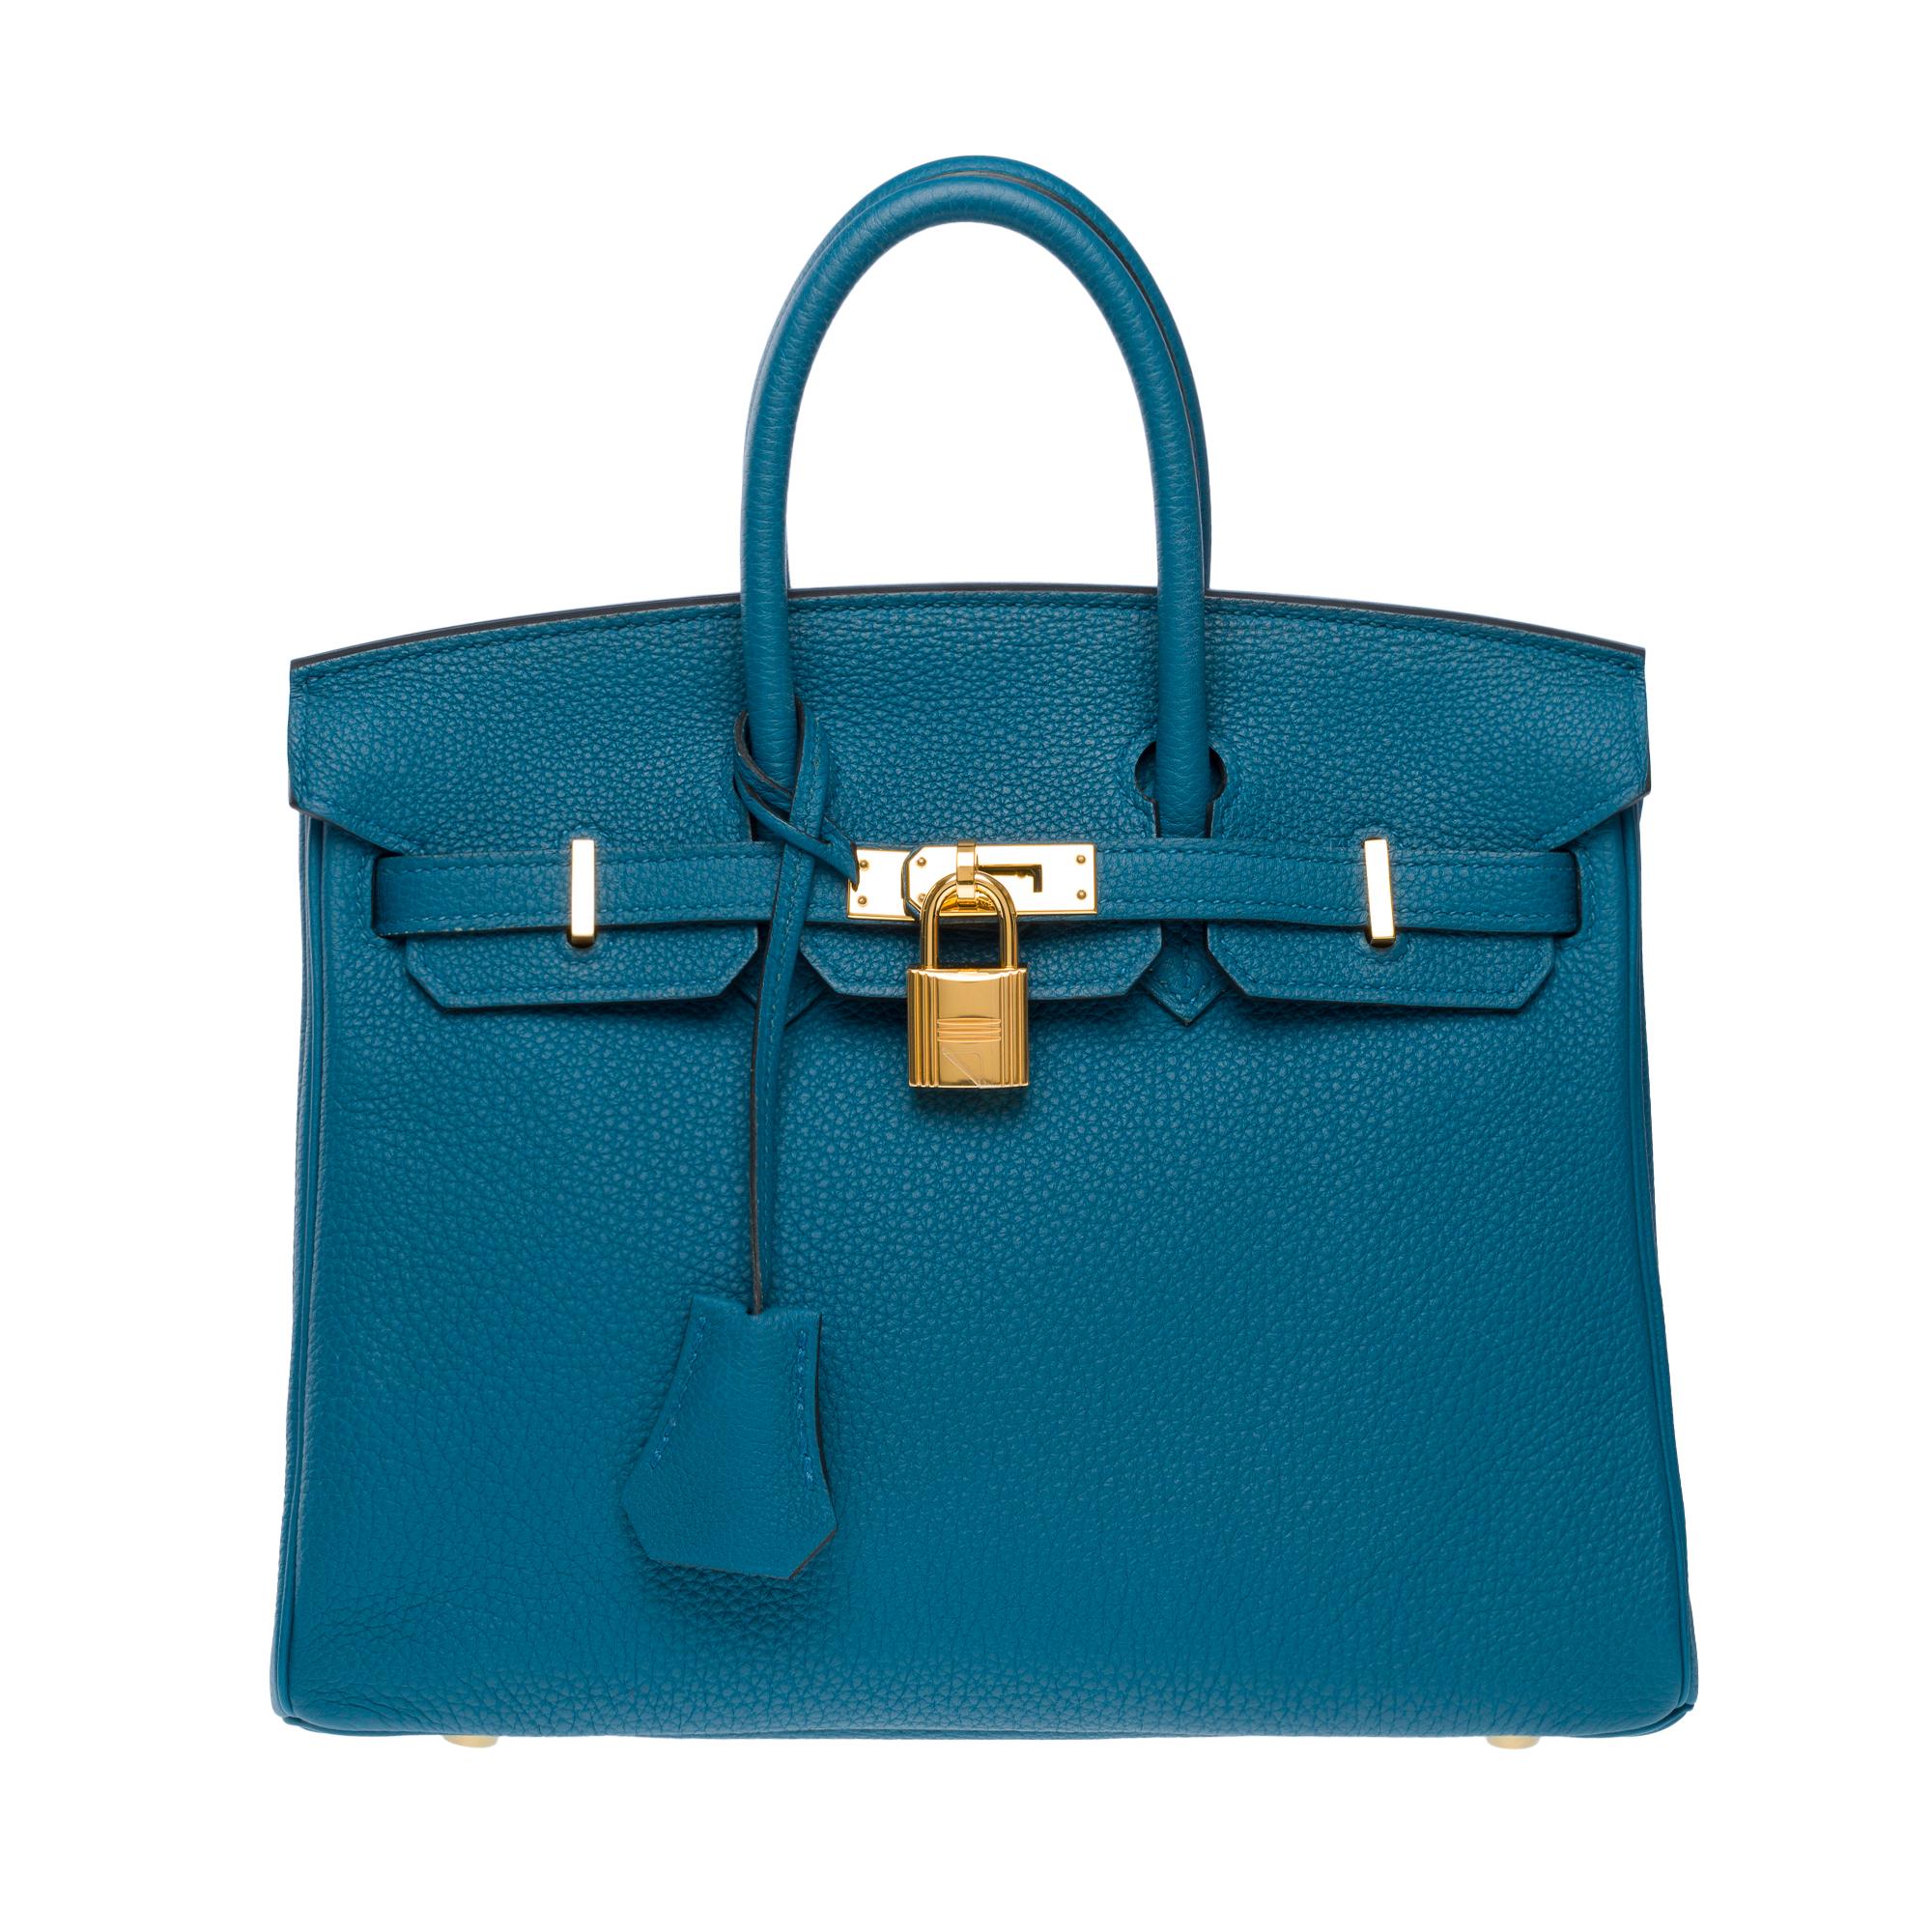 Women's Amazing Hermes Birkin 25cm handbag in Togo Blue Cobalt leather, GHW For Sale